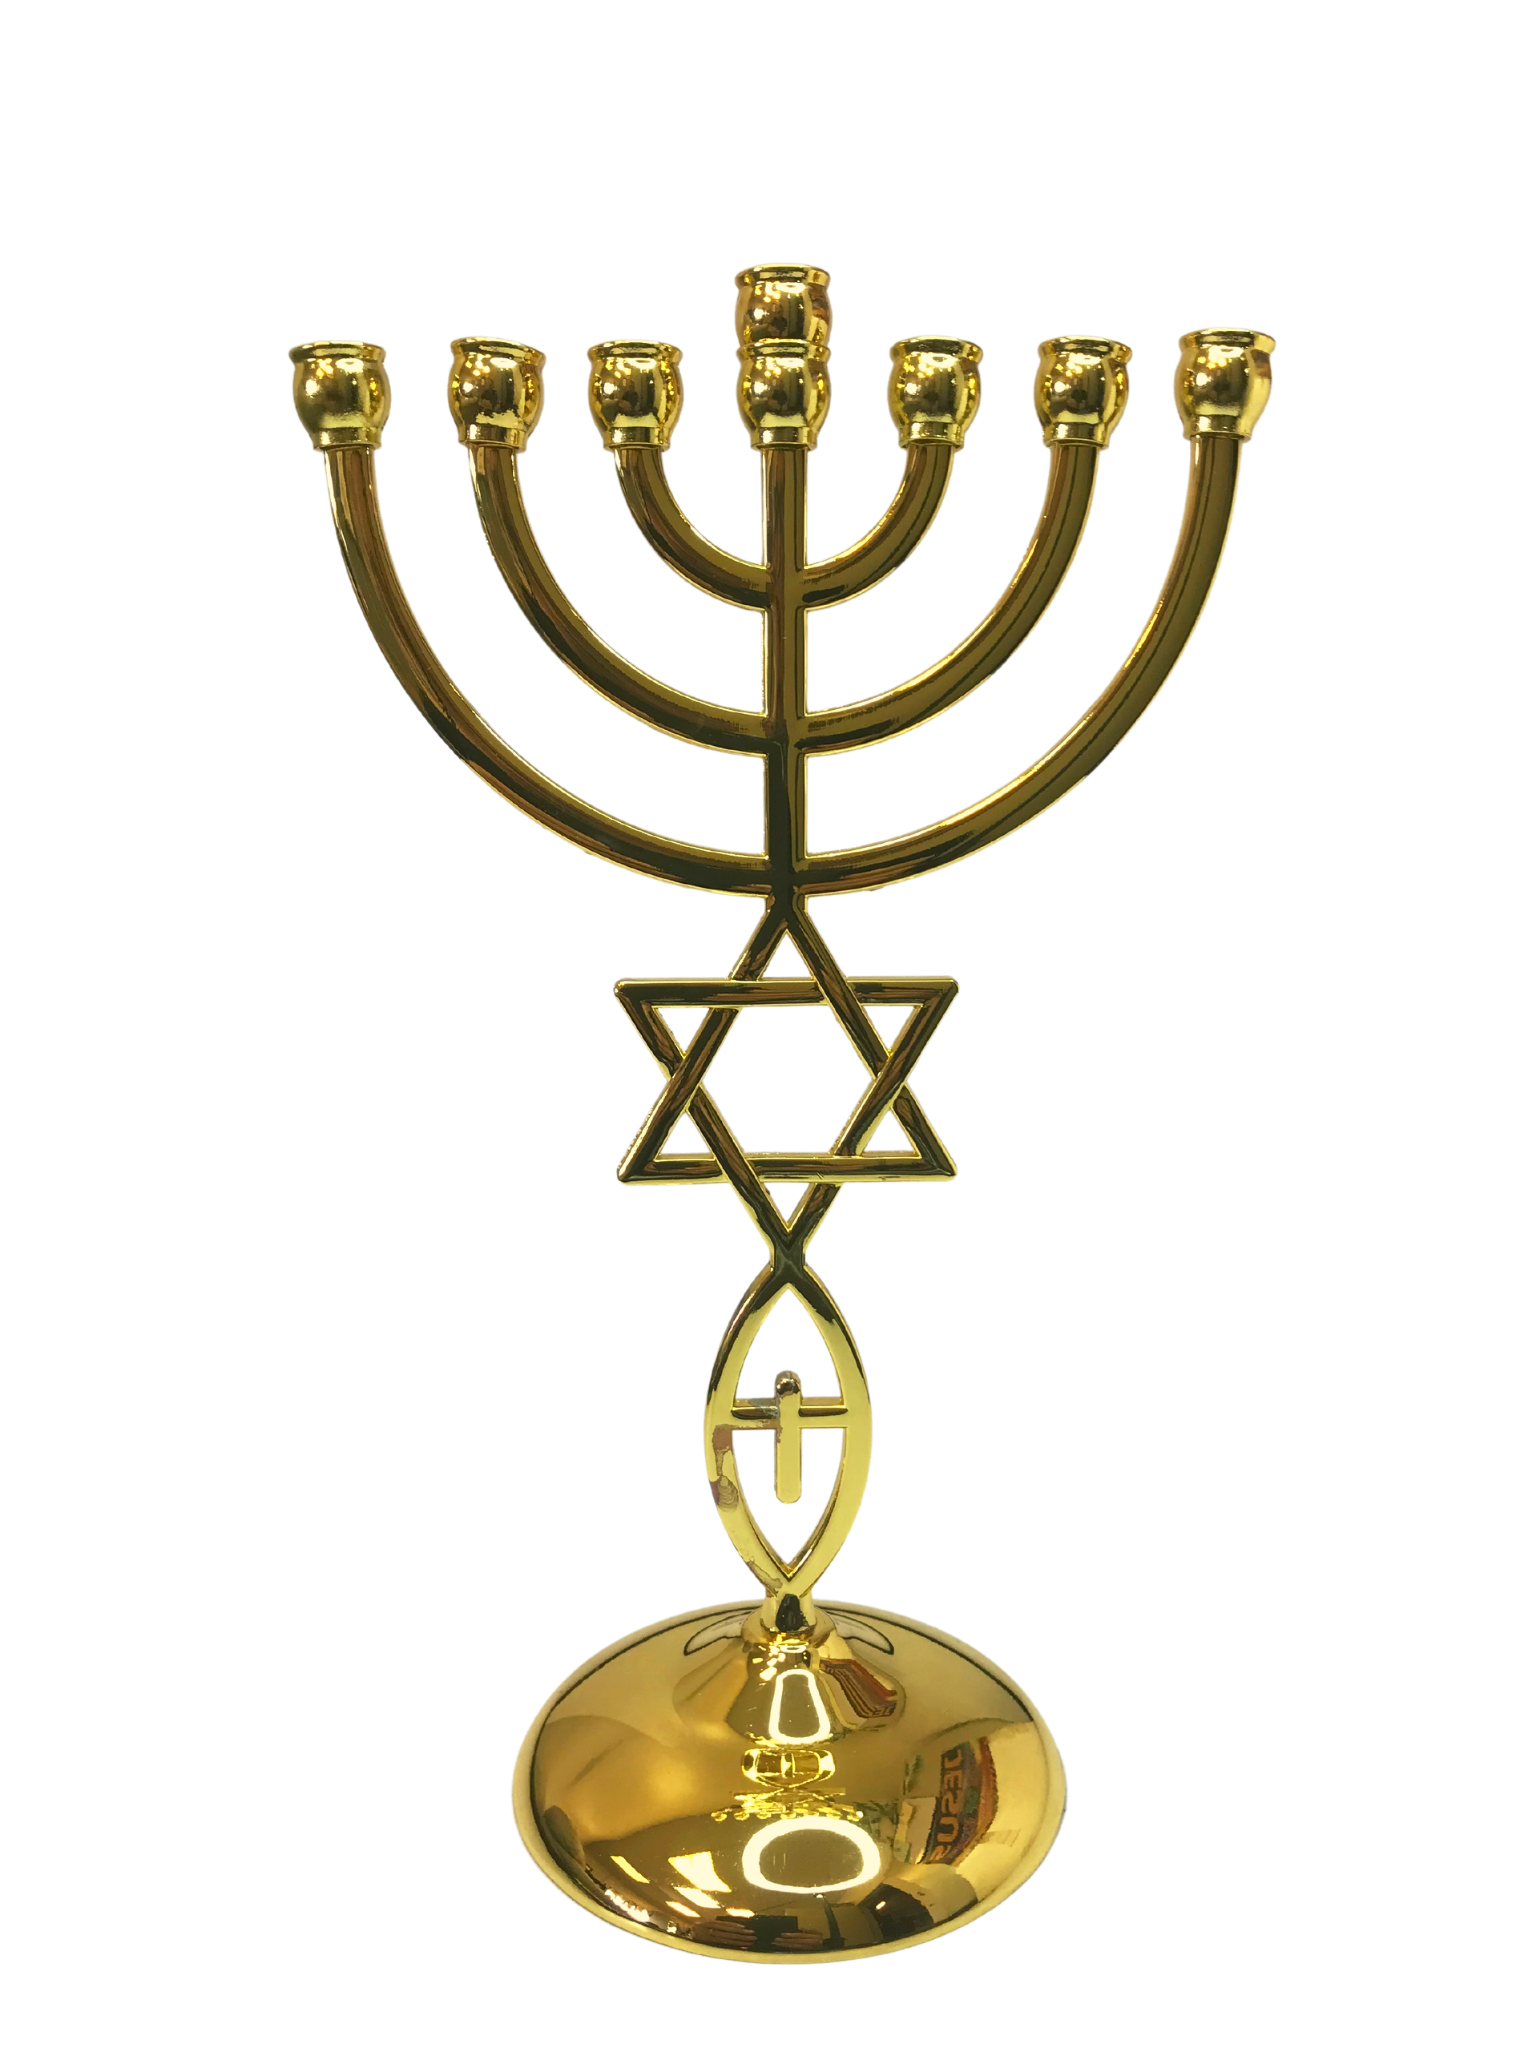 Biedermann & Sons Brass Harp Design Jewish Menorah Chanukah Decor Candle Holder 